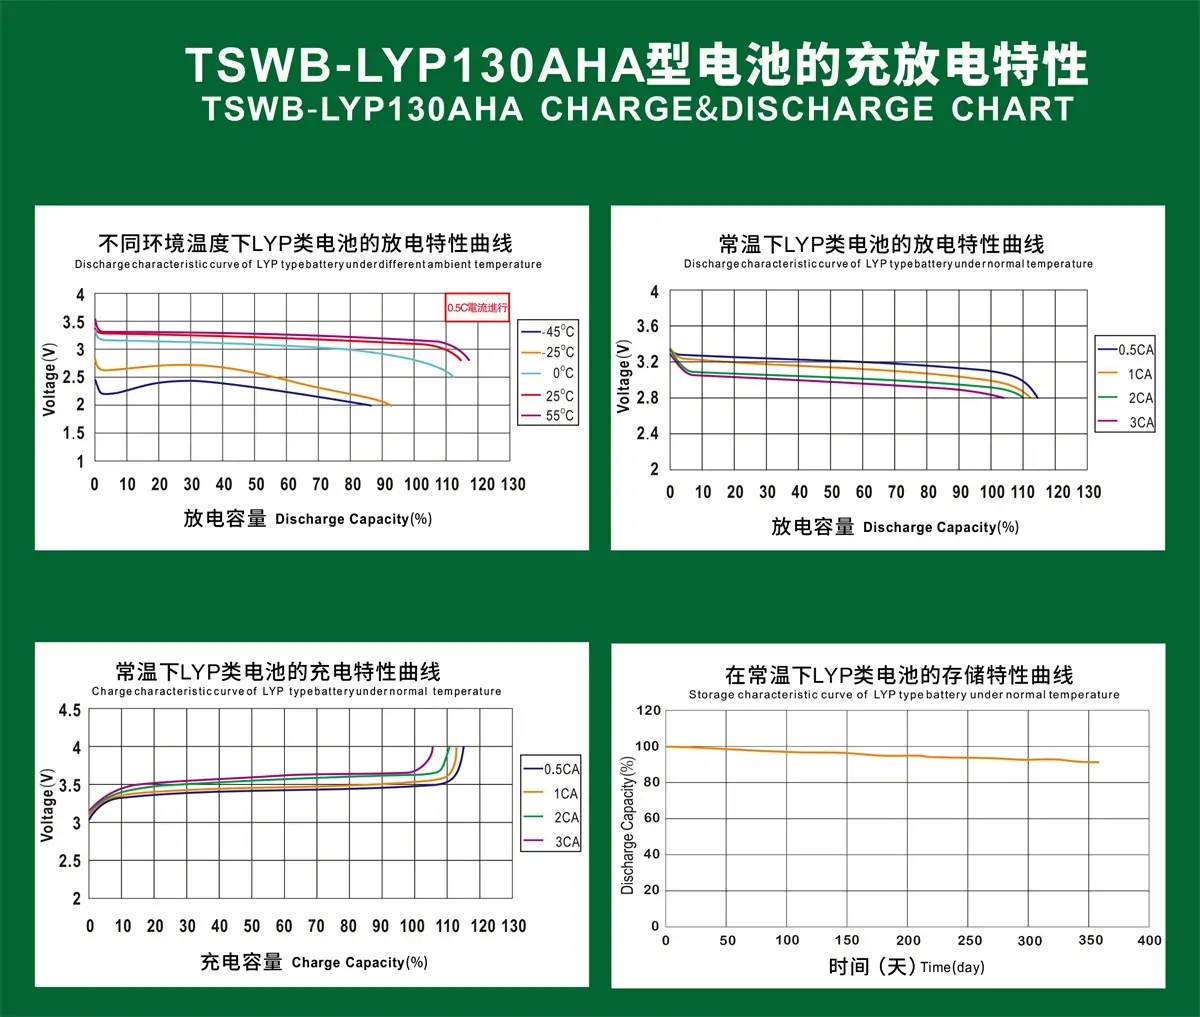 TSWB-LYP130AHA CHARGE&DISCHARGE CHART